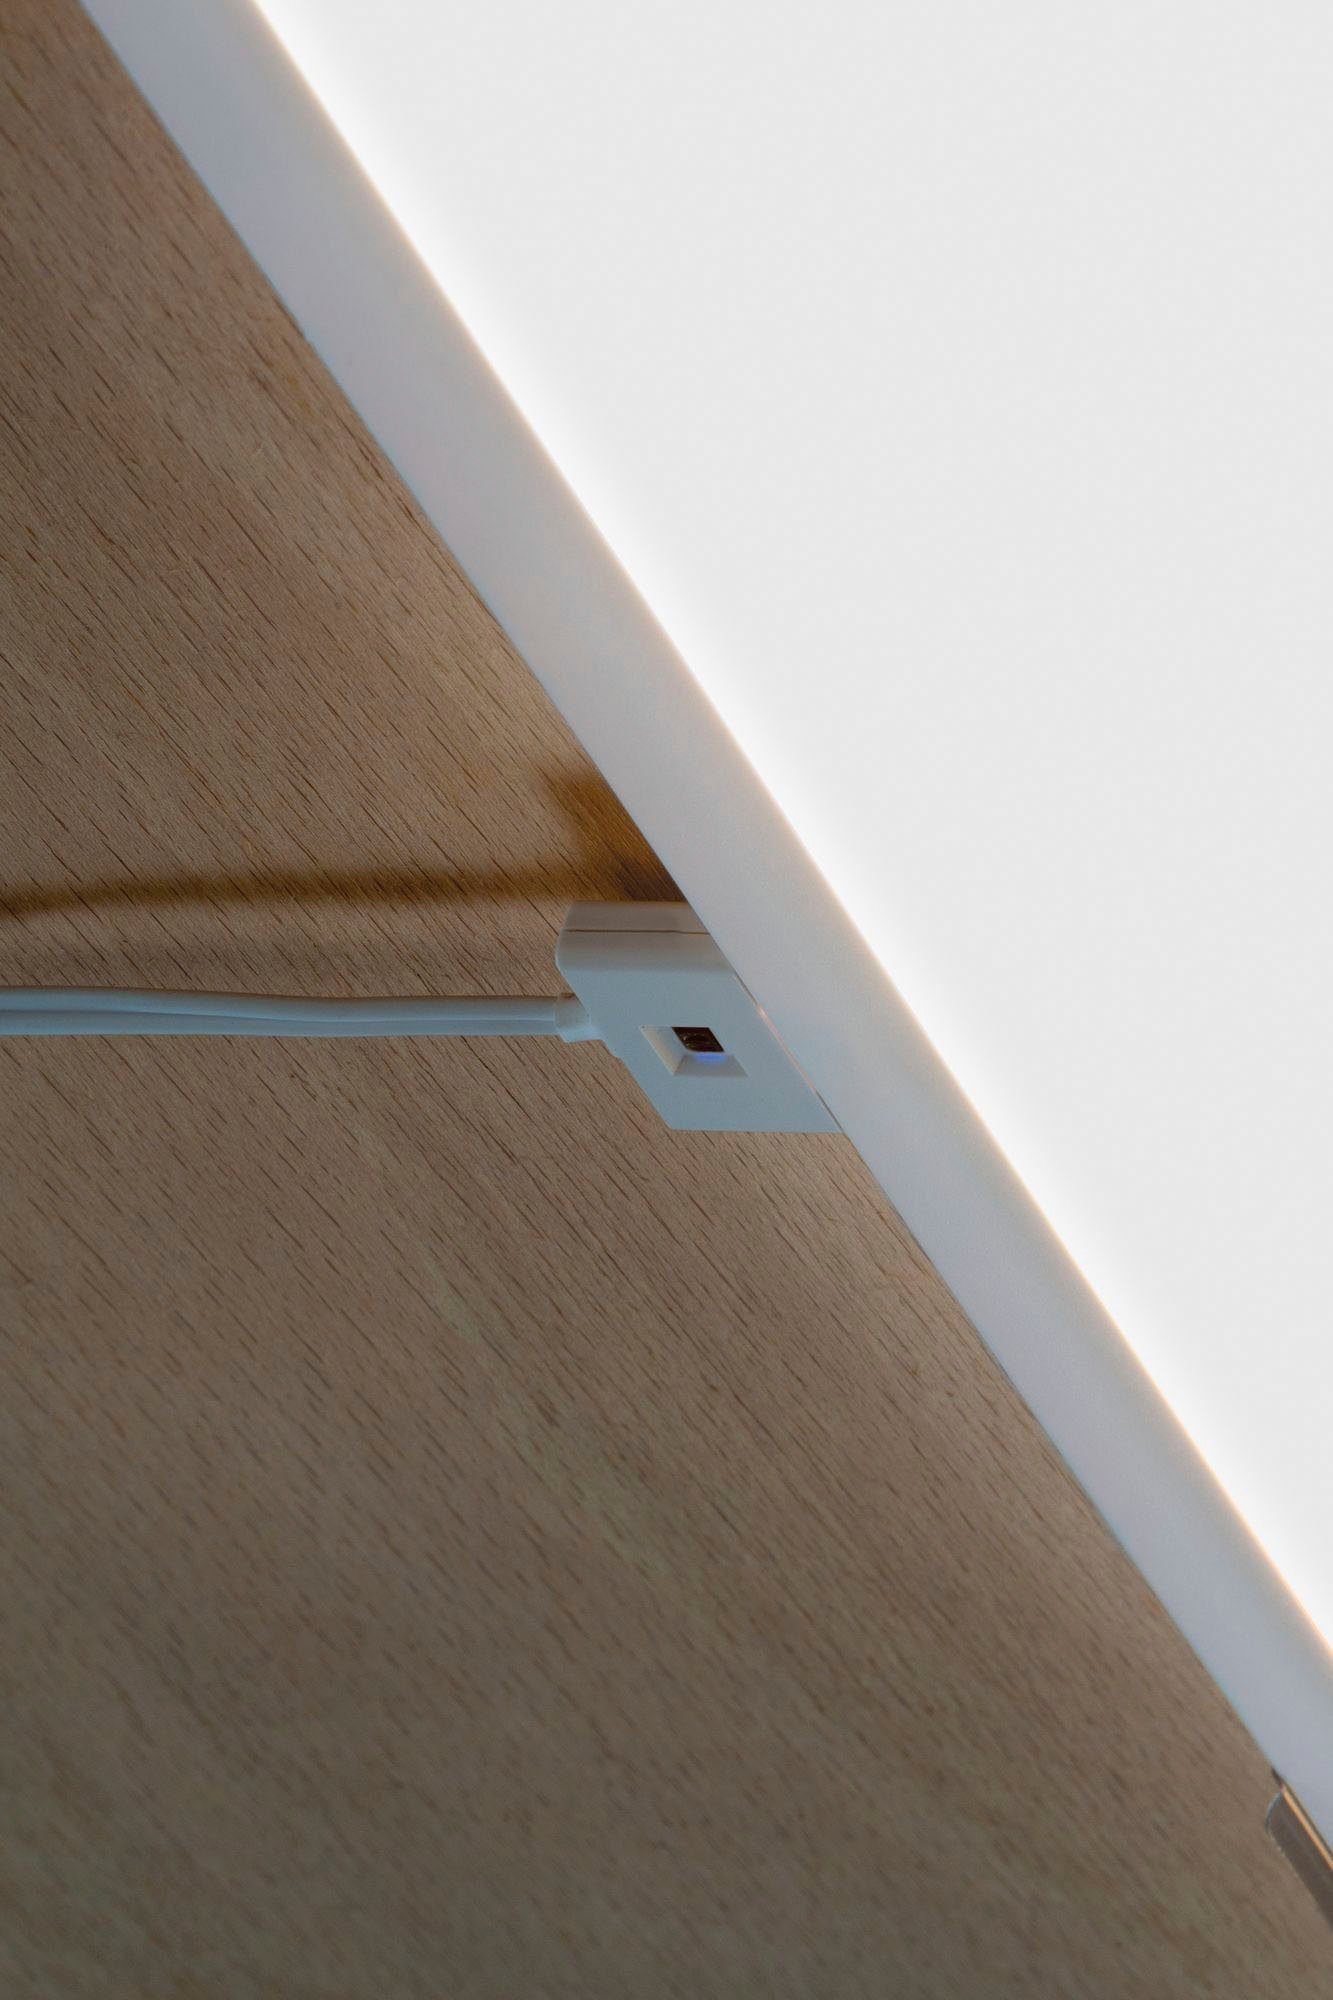 Paulmann Unterschrankleuchte Unterschrank-Panel LED Ace Weiß Weiß LED 10x30cm Ace fest 10x30cm 7,5W Basisset, 7,5W LED Warmweiß, Basisset Unterschrank-Panel integriert